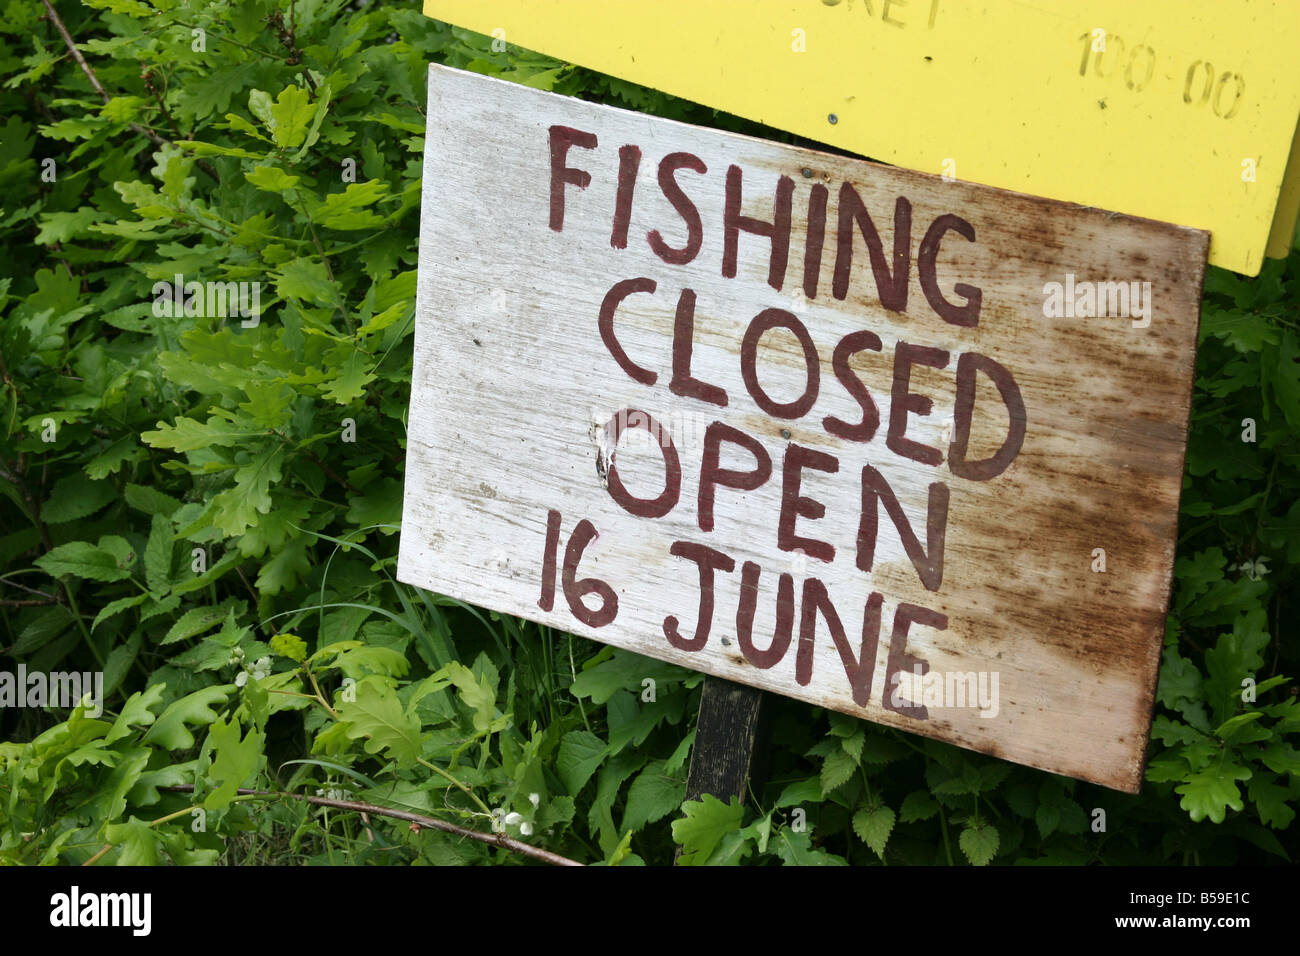 Fishing closed sign Stock Photo